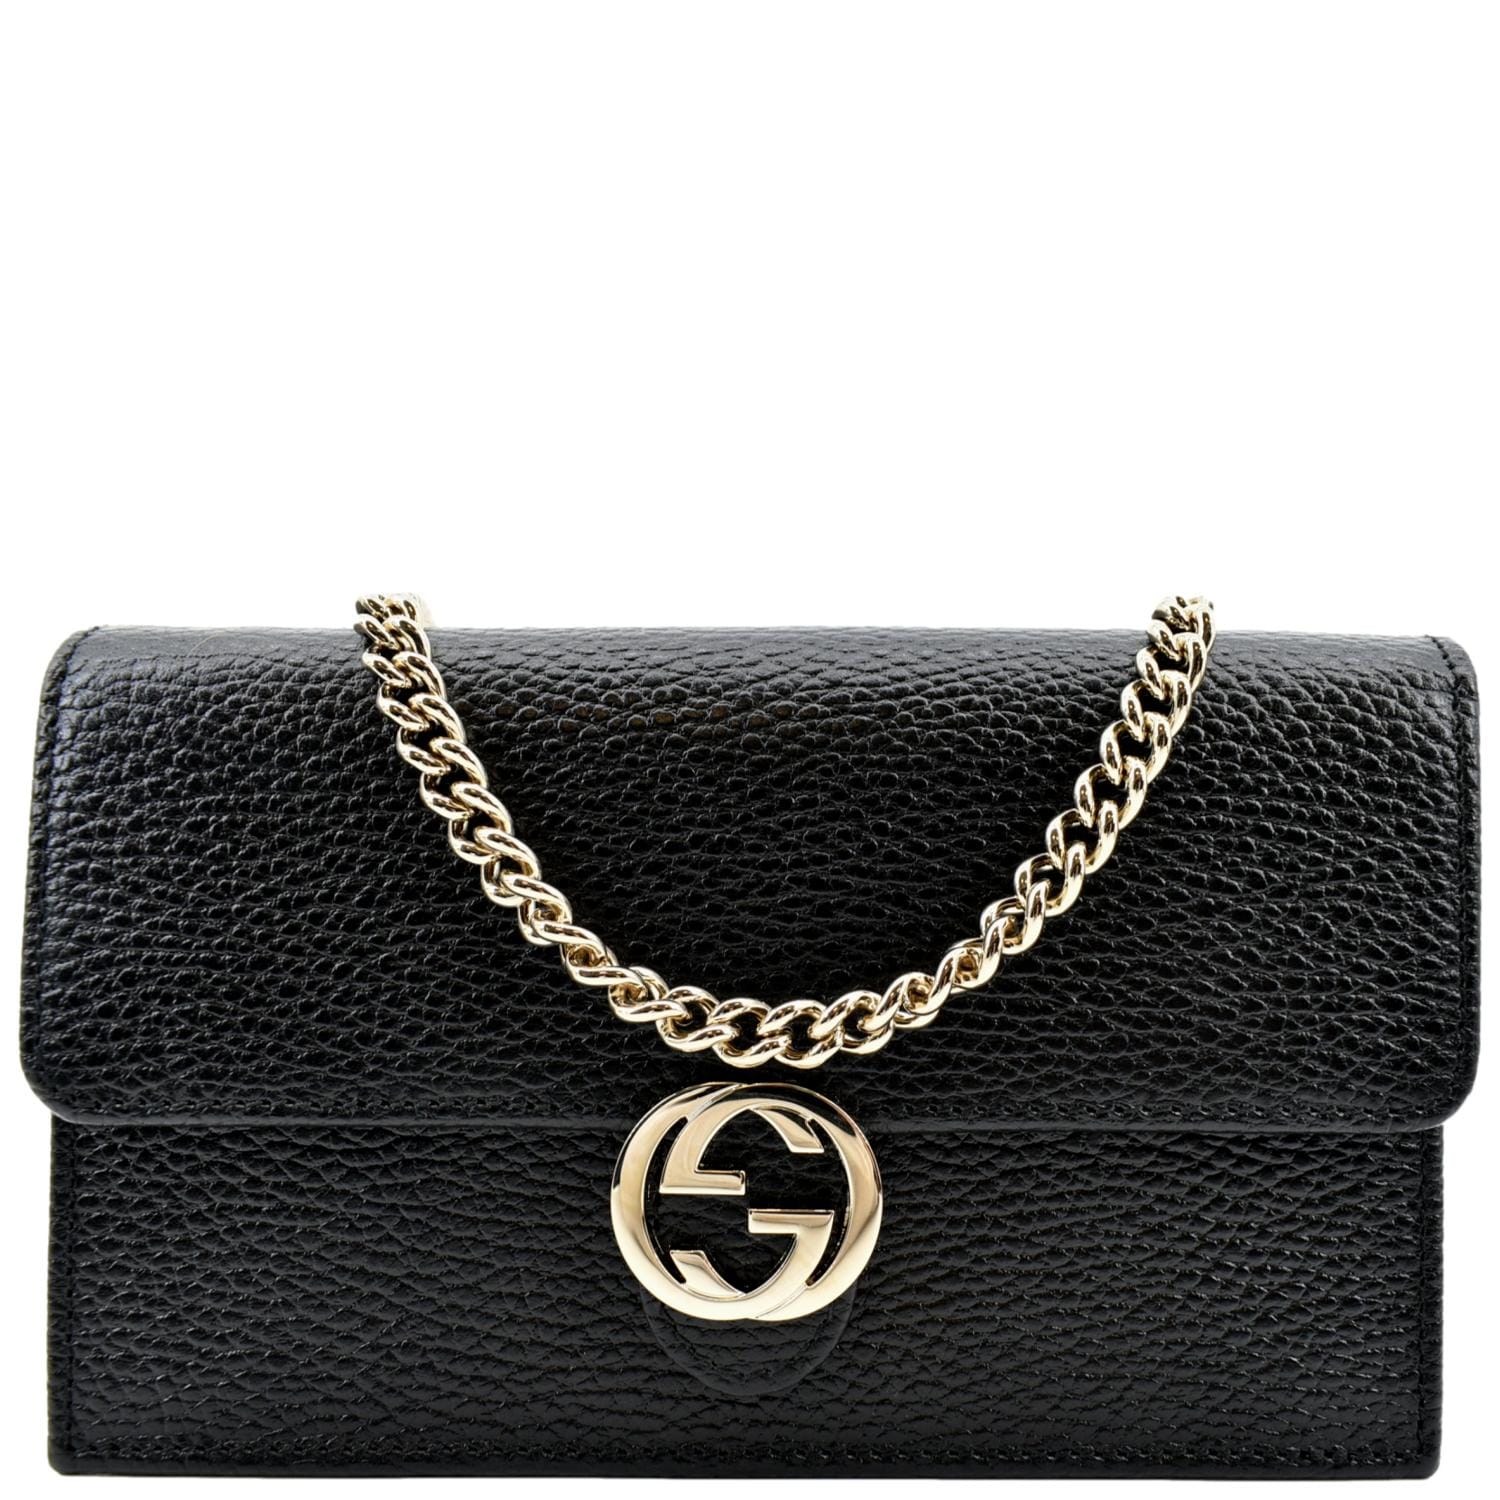 Gucci Black Leather Marmont Interlocking GG Crossbody Bag